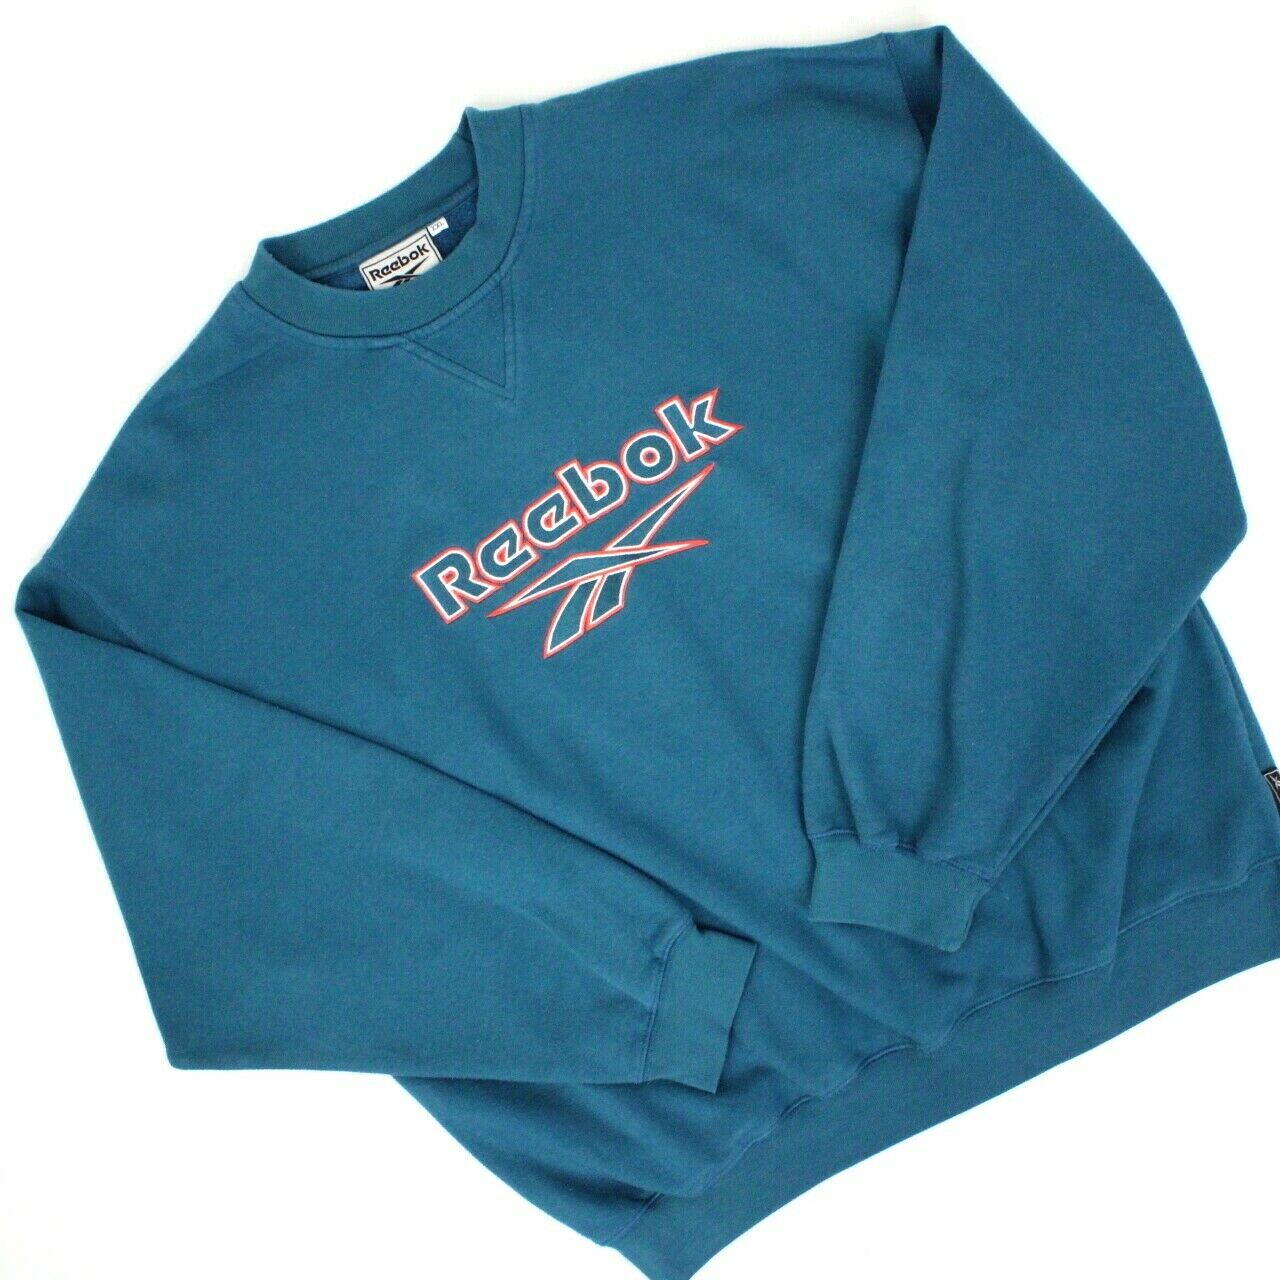 REEBOK 90s Sweatshirt Teal | XXL